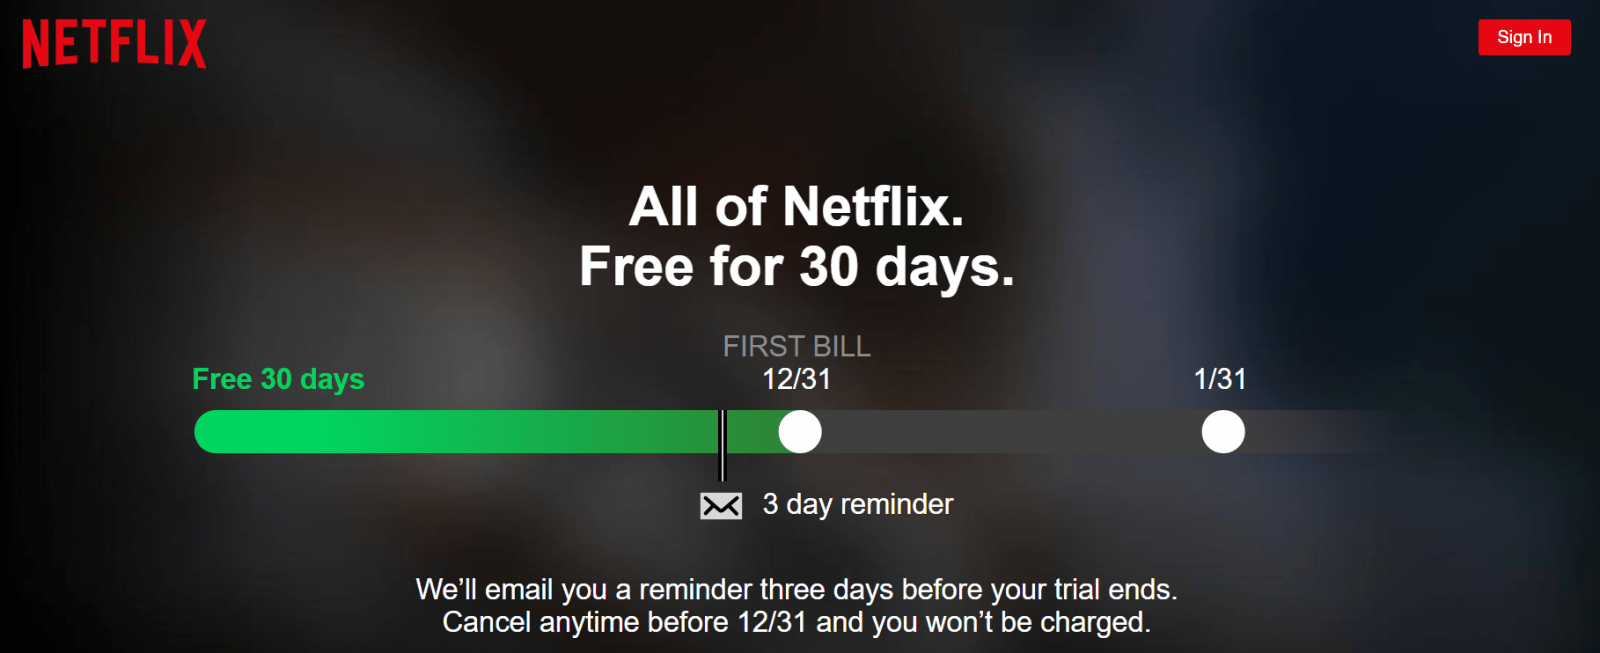 Netflix free trial page screenshot